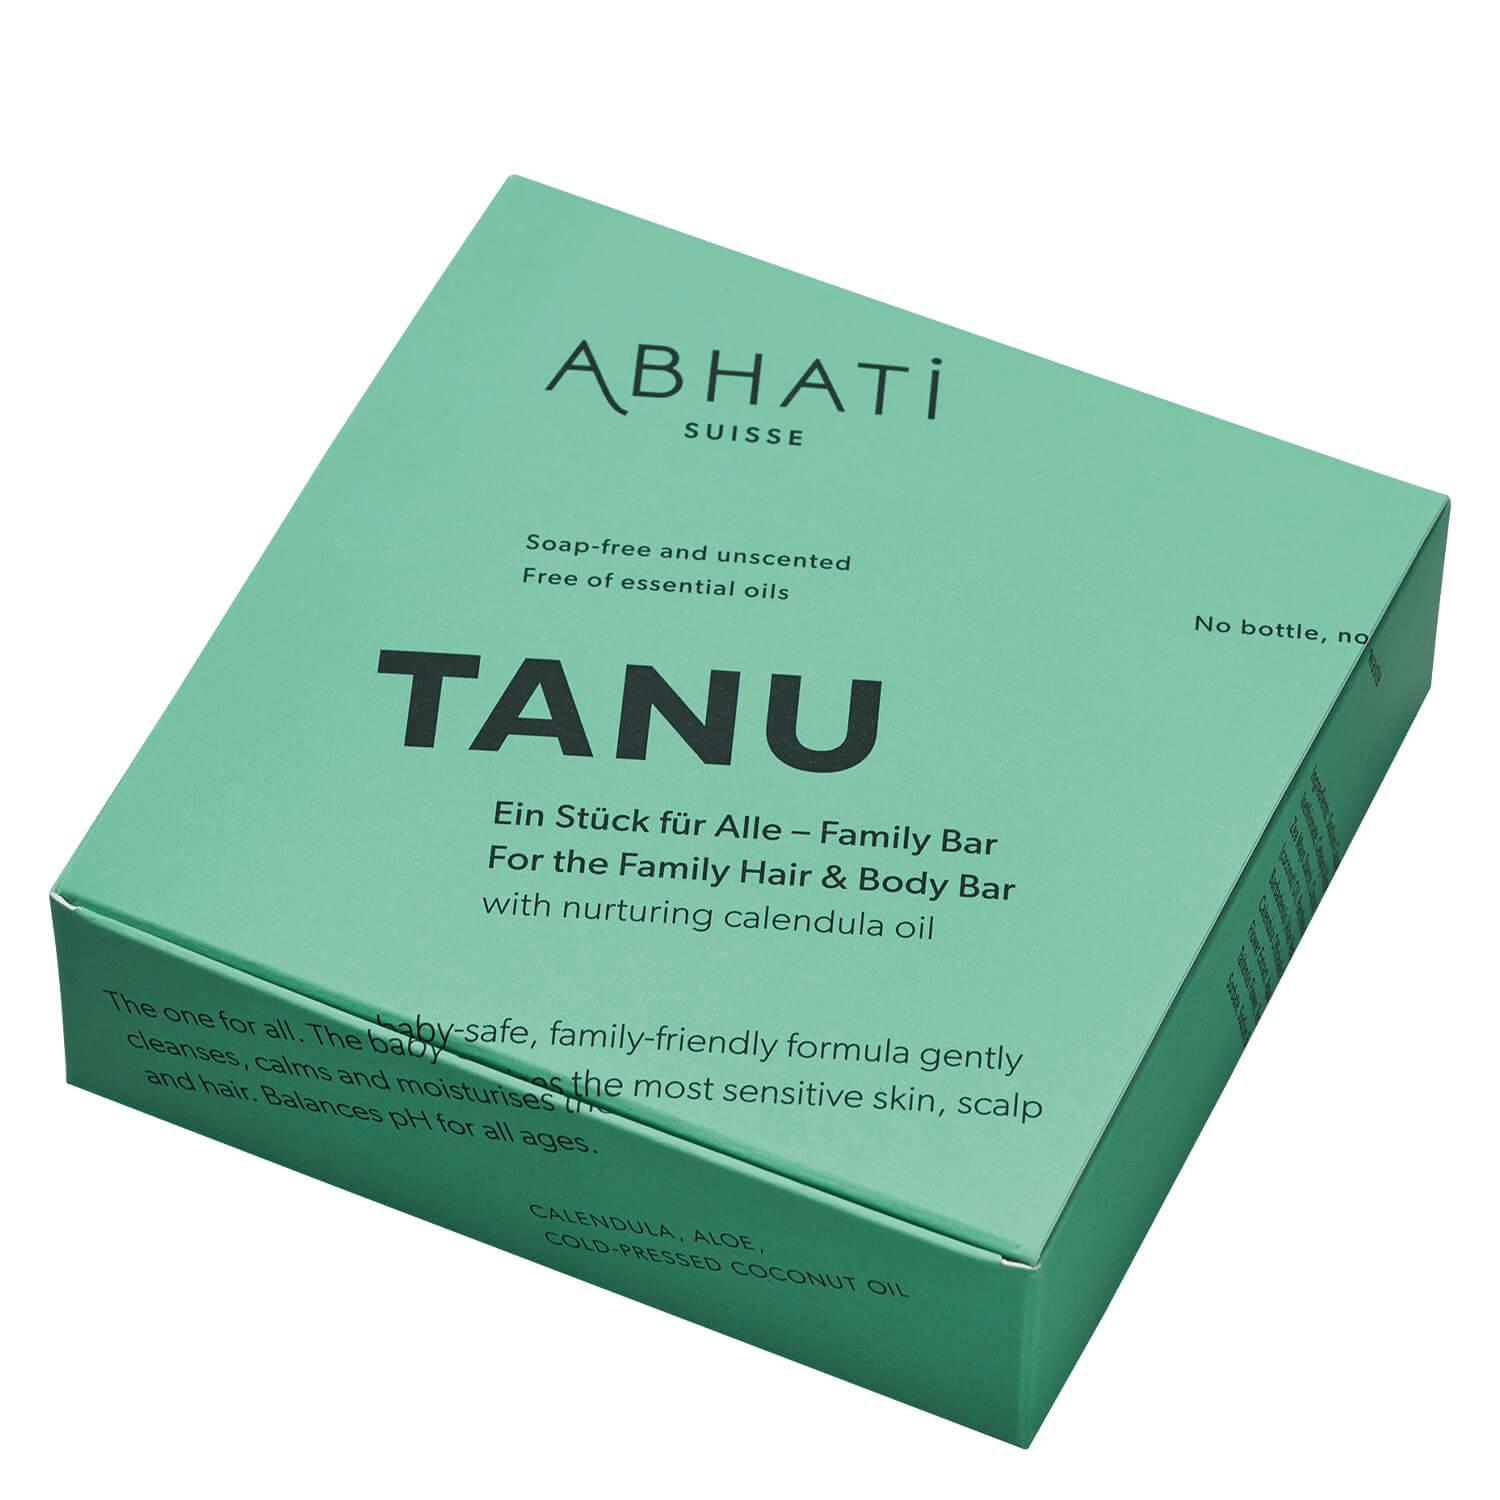 ABHATI Suisse - Tanu Family Hair & Body Bar